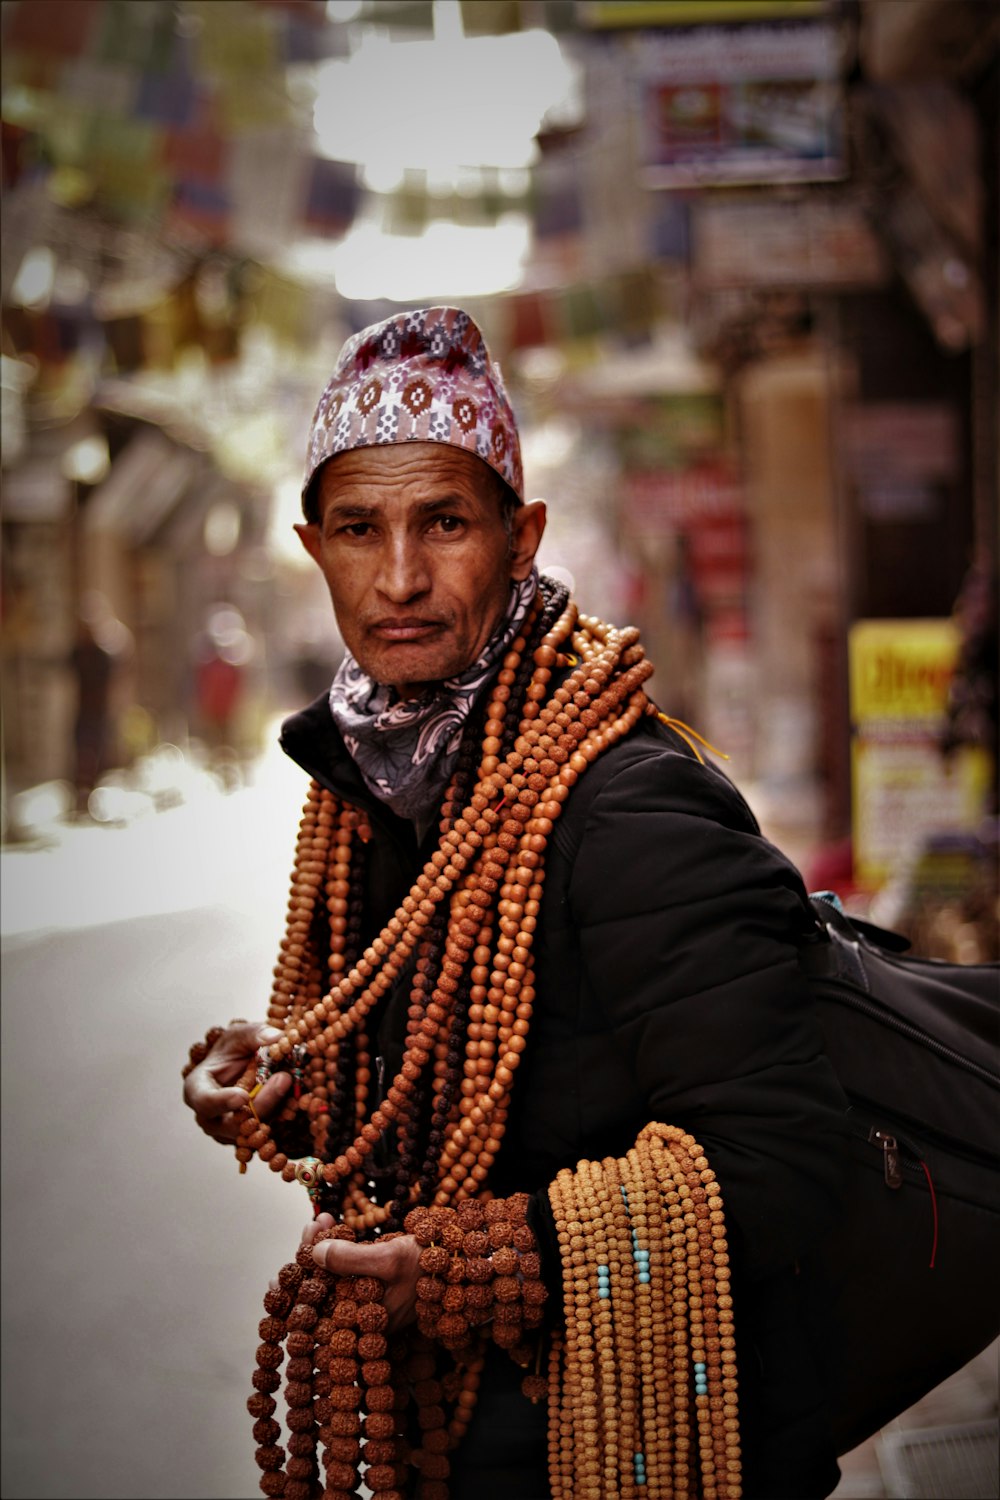 man carrying brown beads while walking on street